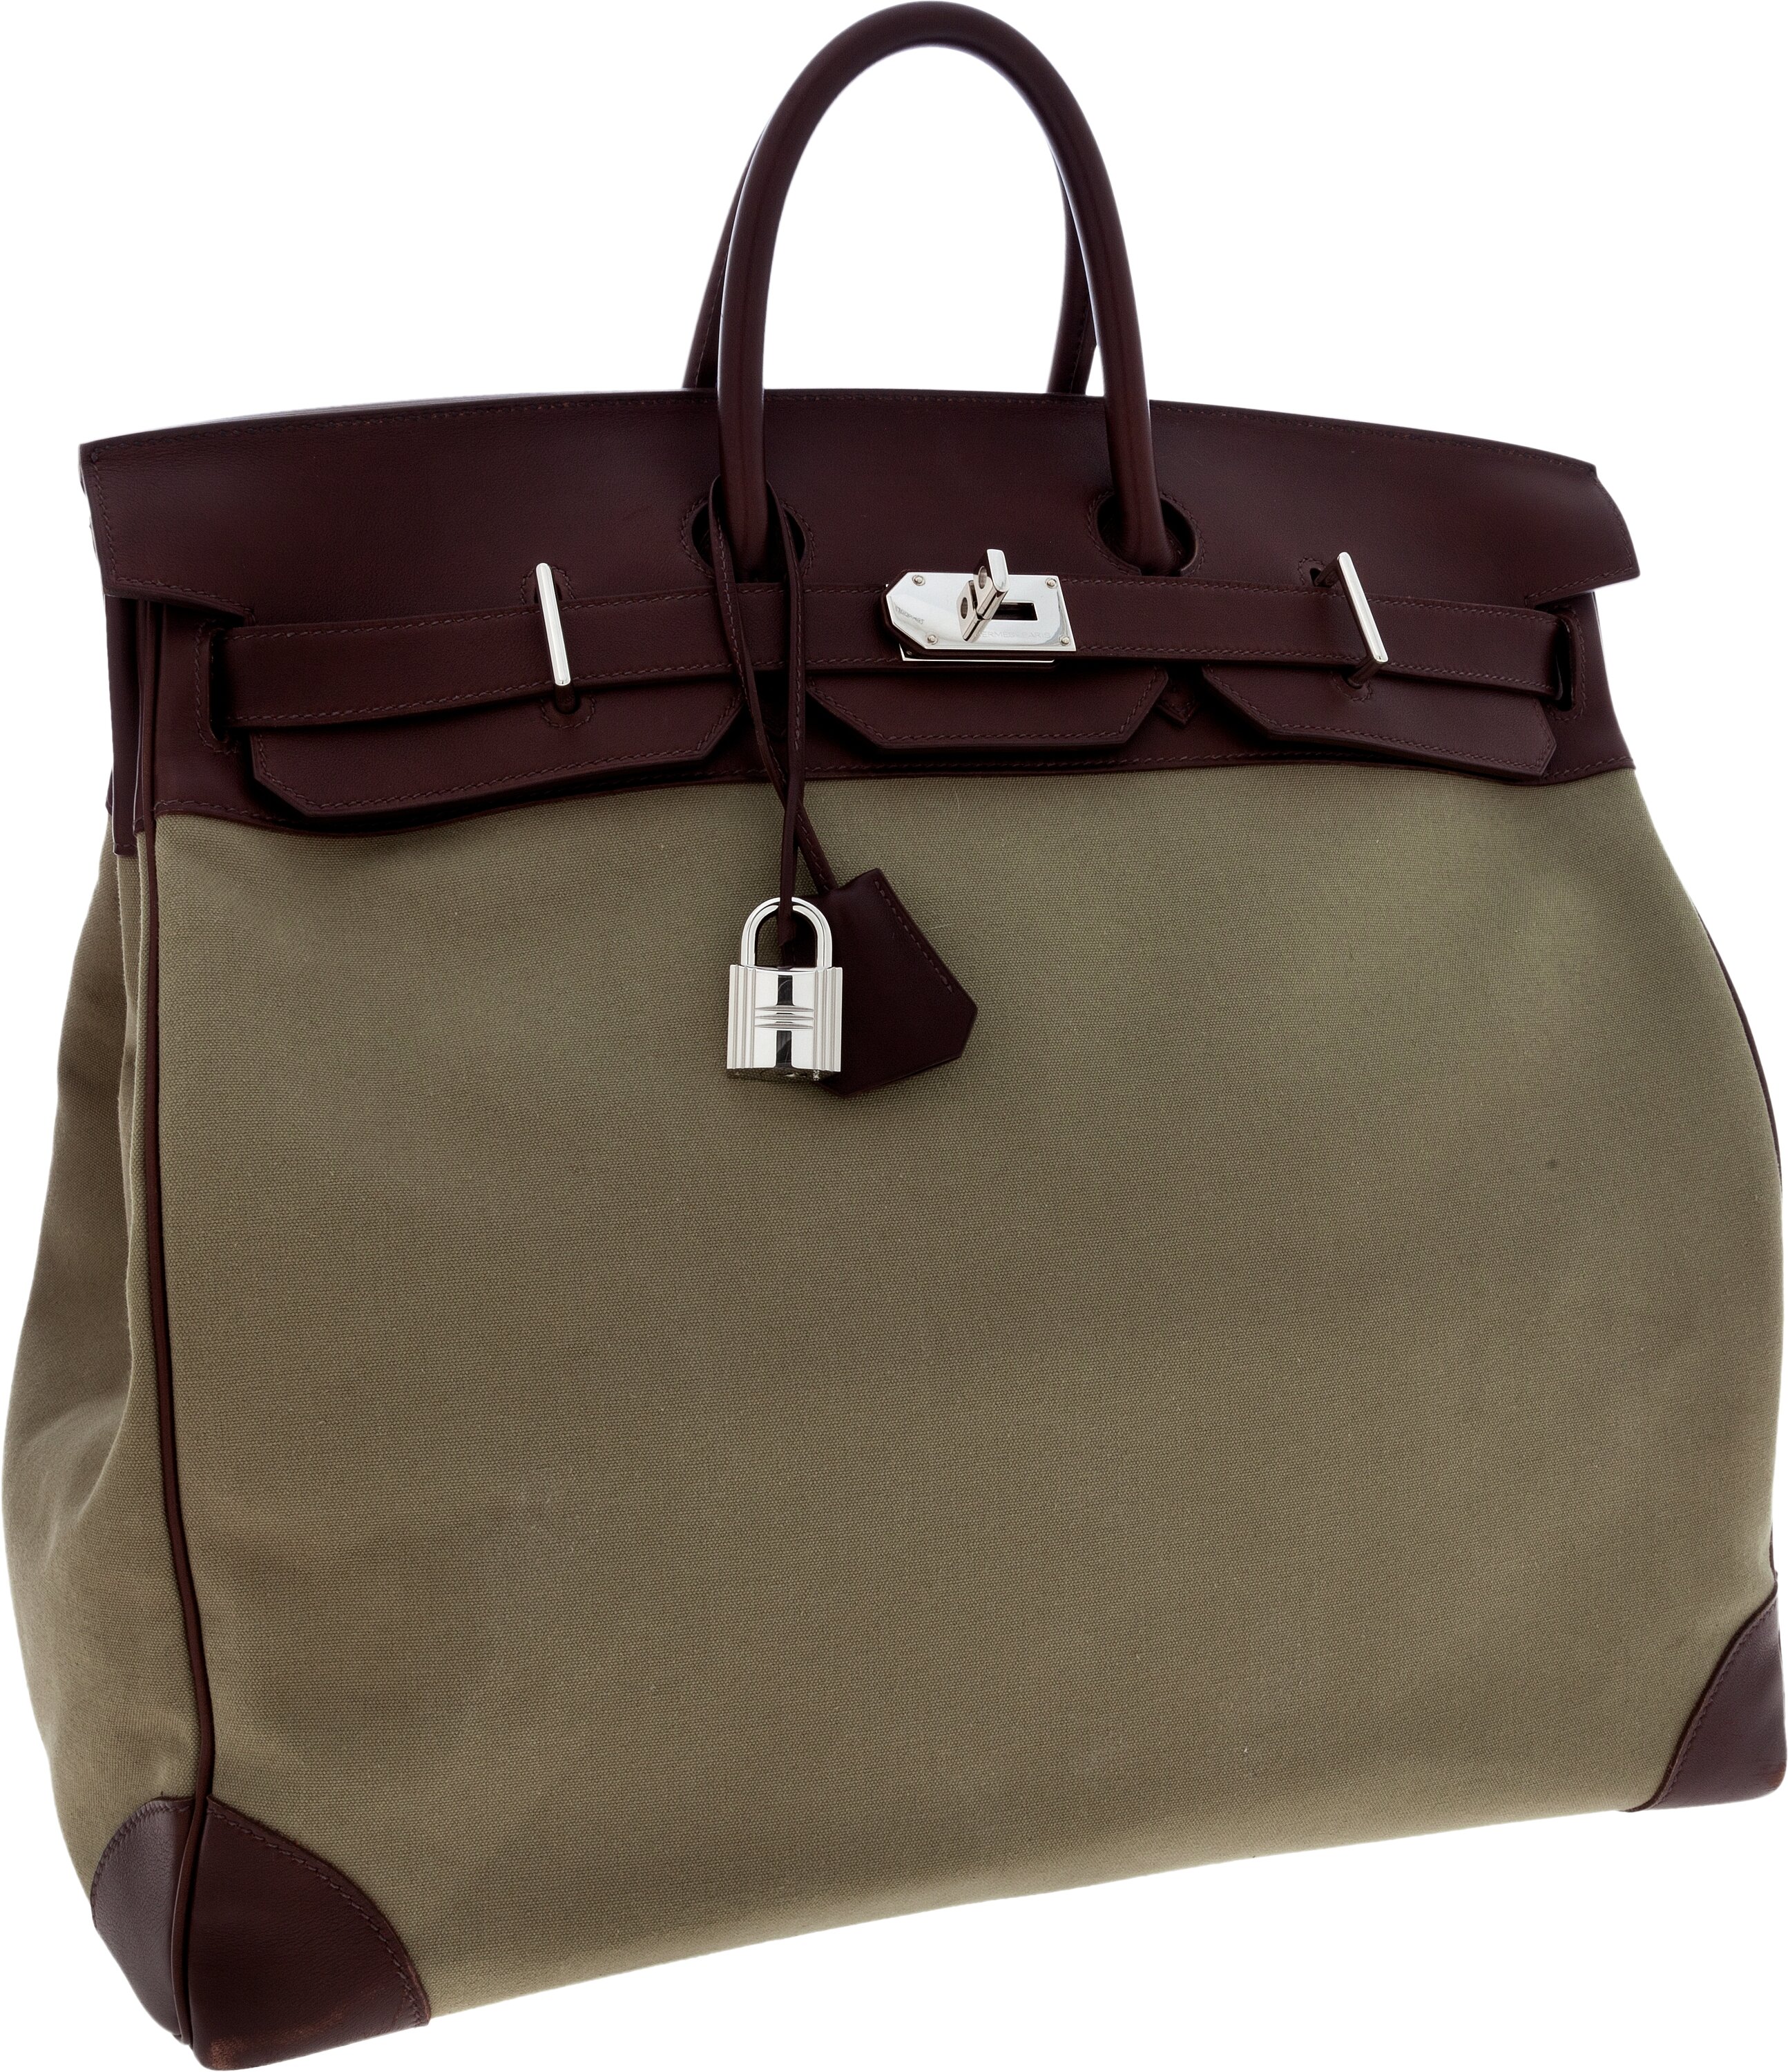 Hermes 50cm Canvas and Leather Travel Bag, 1stdibs.com